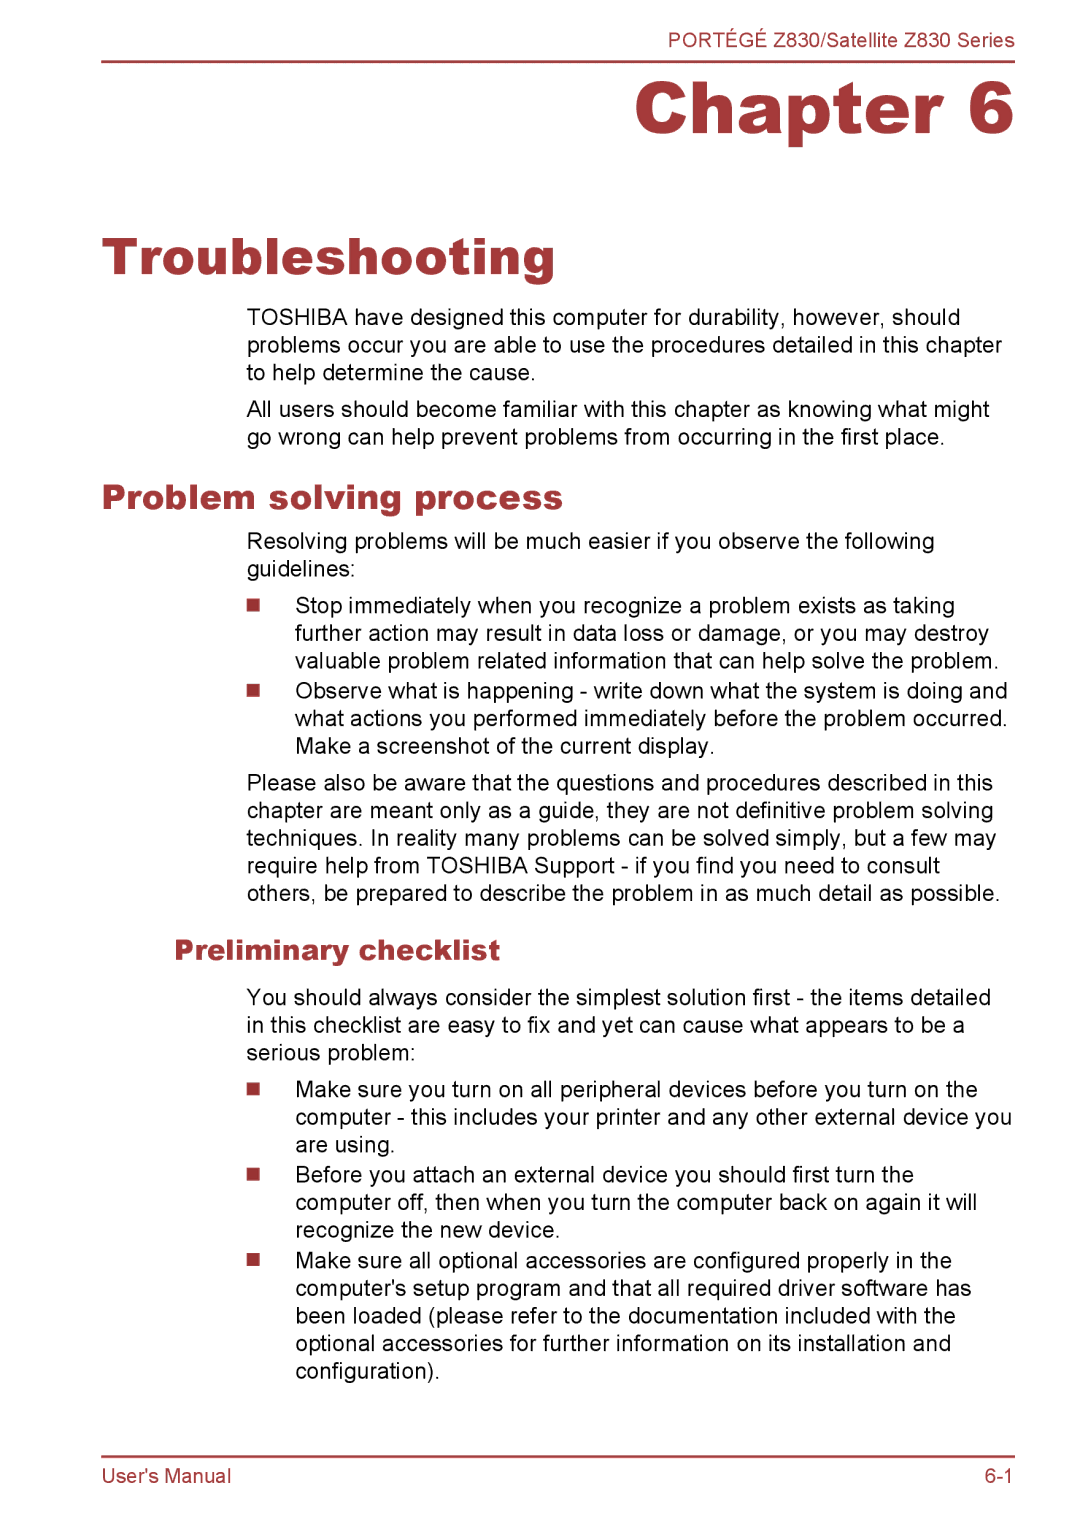 Toshiba Z830 user manual Troubleshooting, Problem solving process, Preliminary checklist 